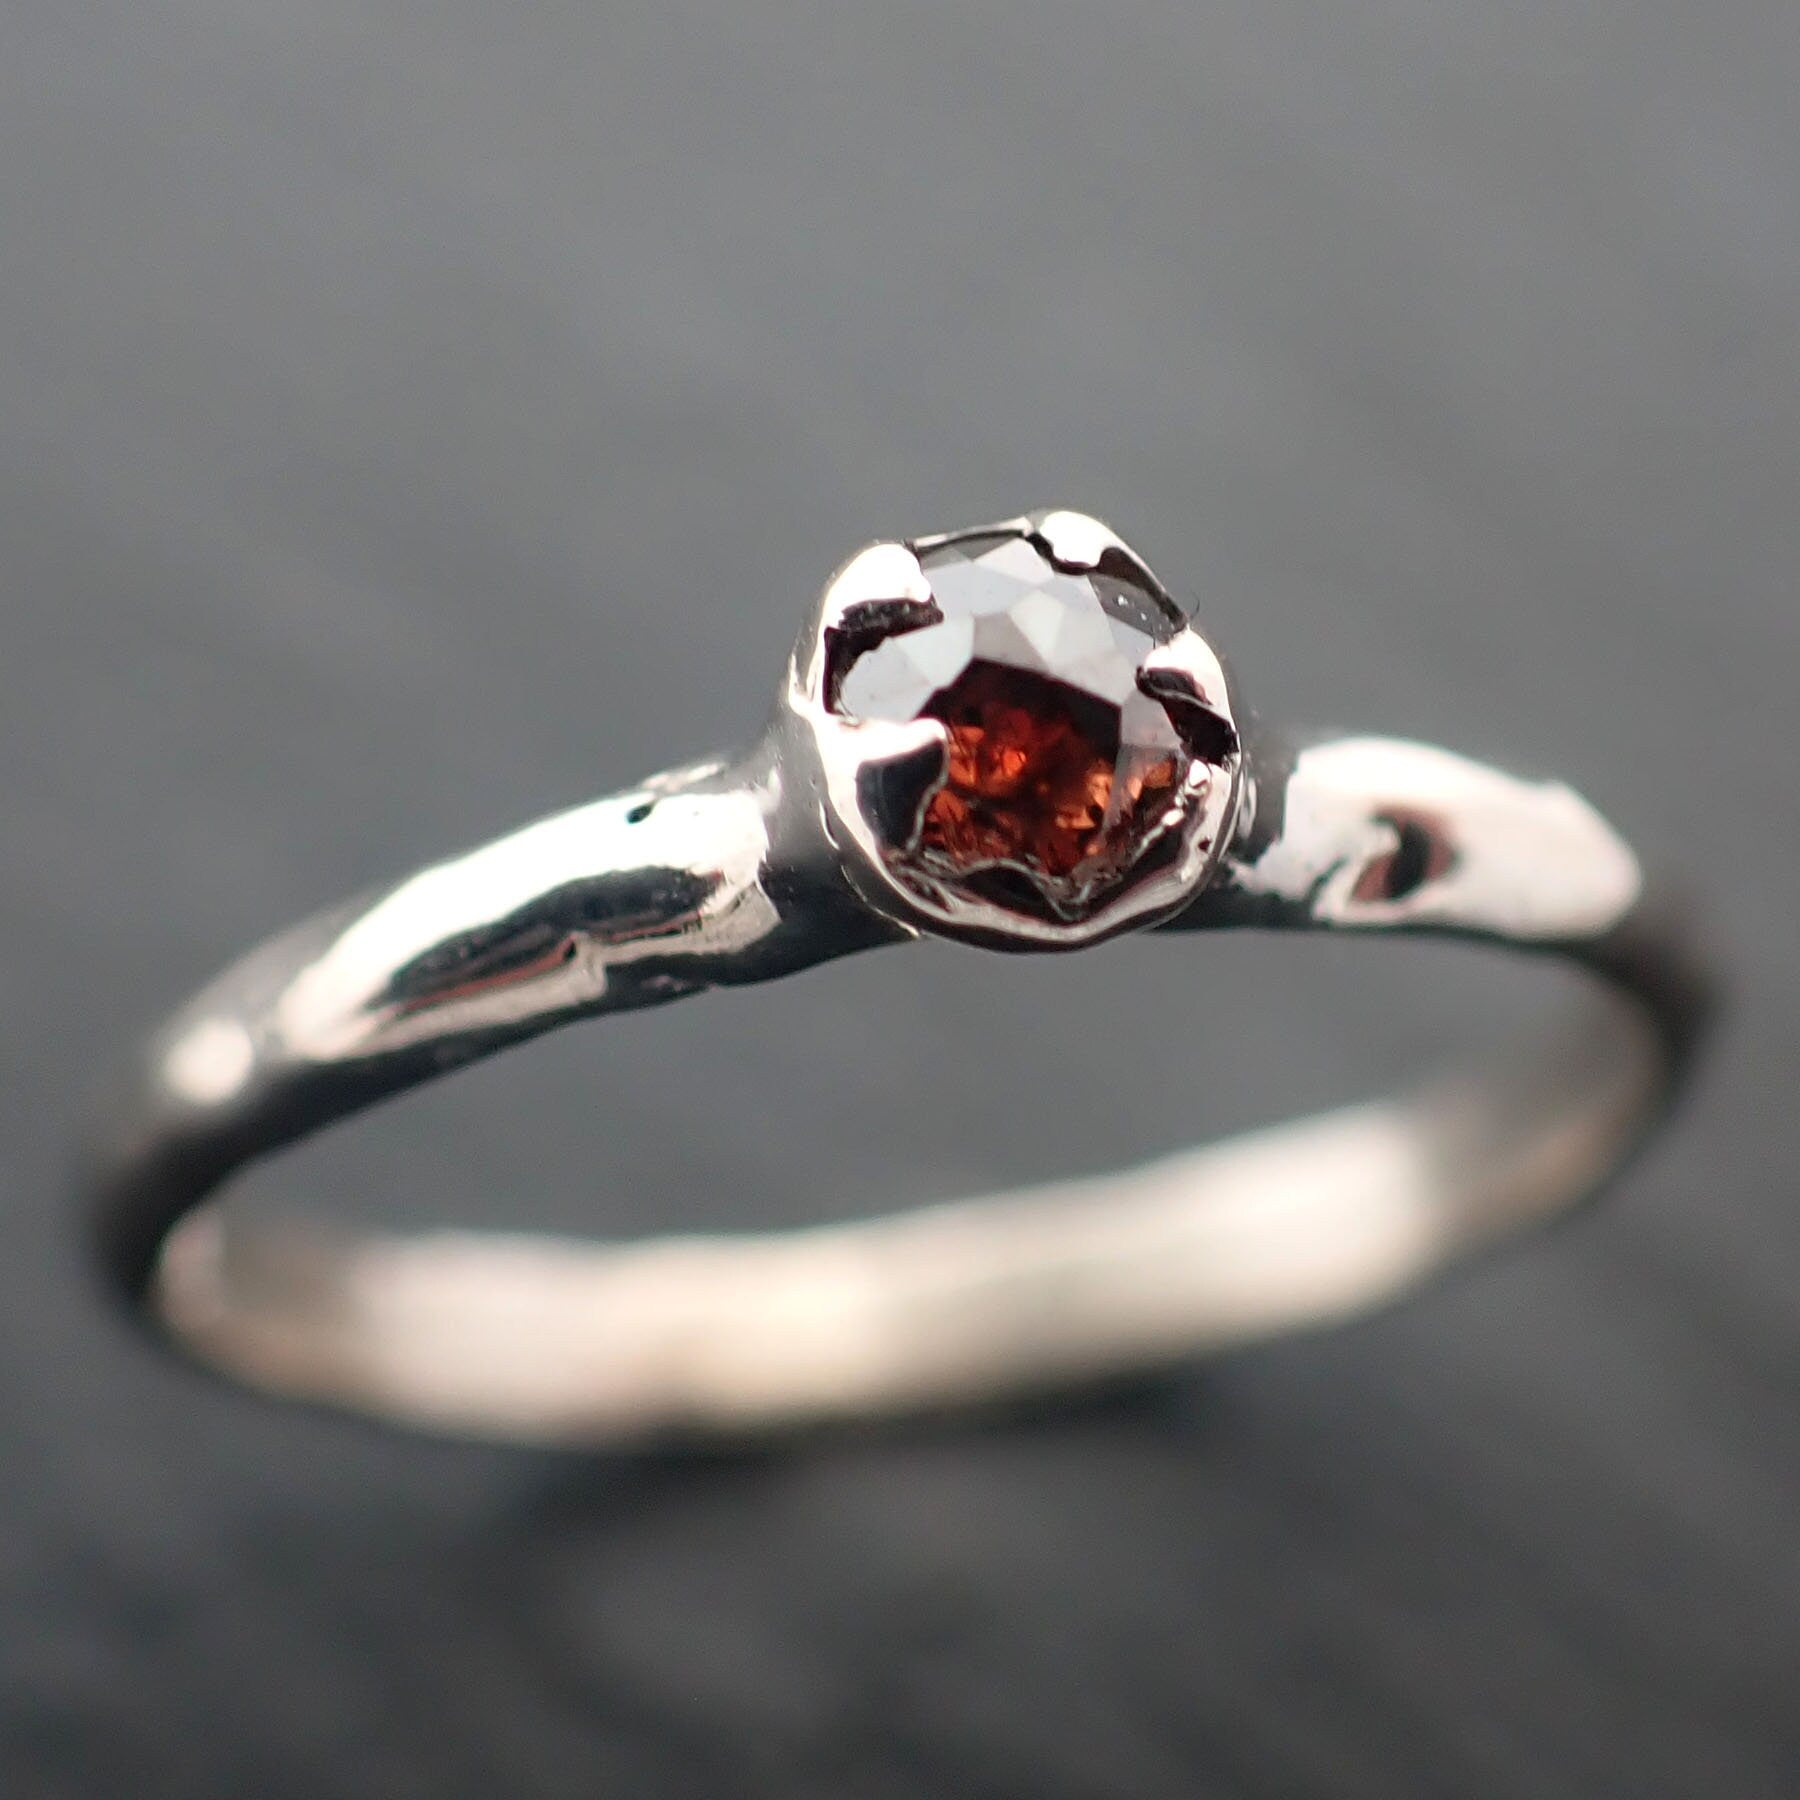 Fancy cut Coral orange Diamond Solitaire Engagement Ring 14k White Gold Rough Diamond ring byAngeline 3498